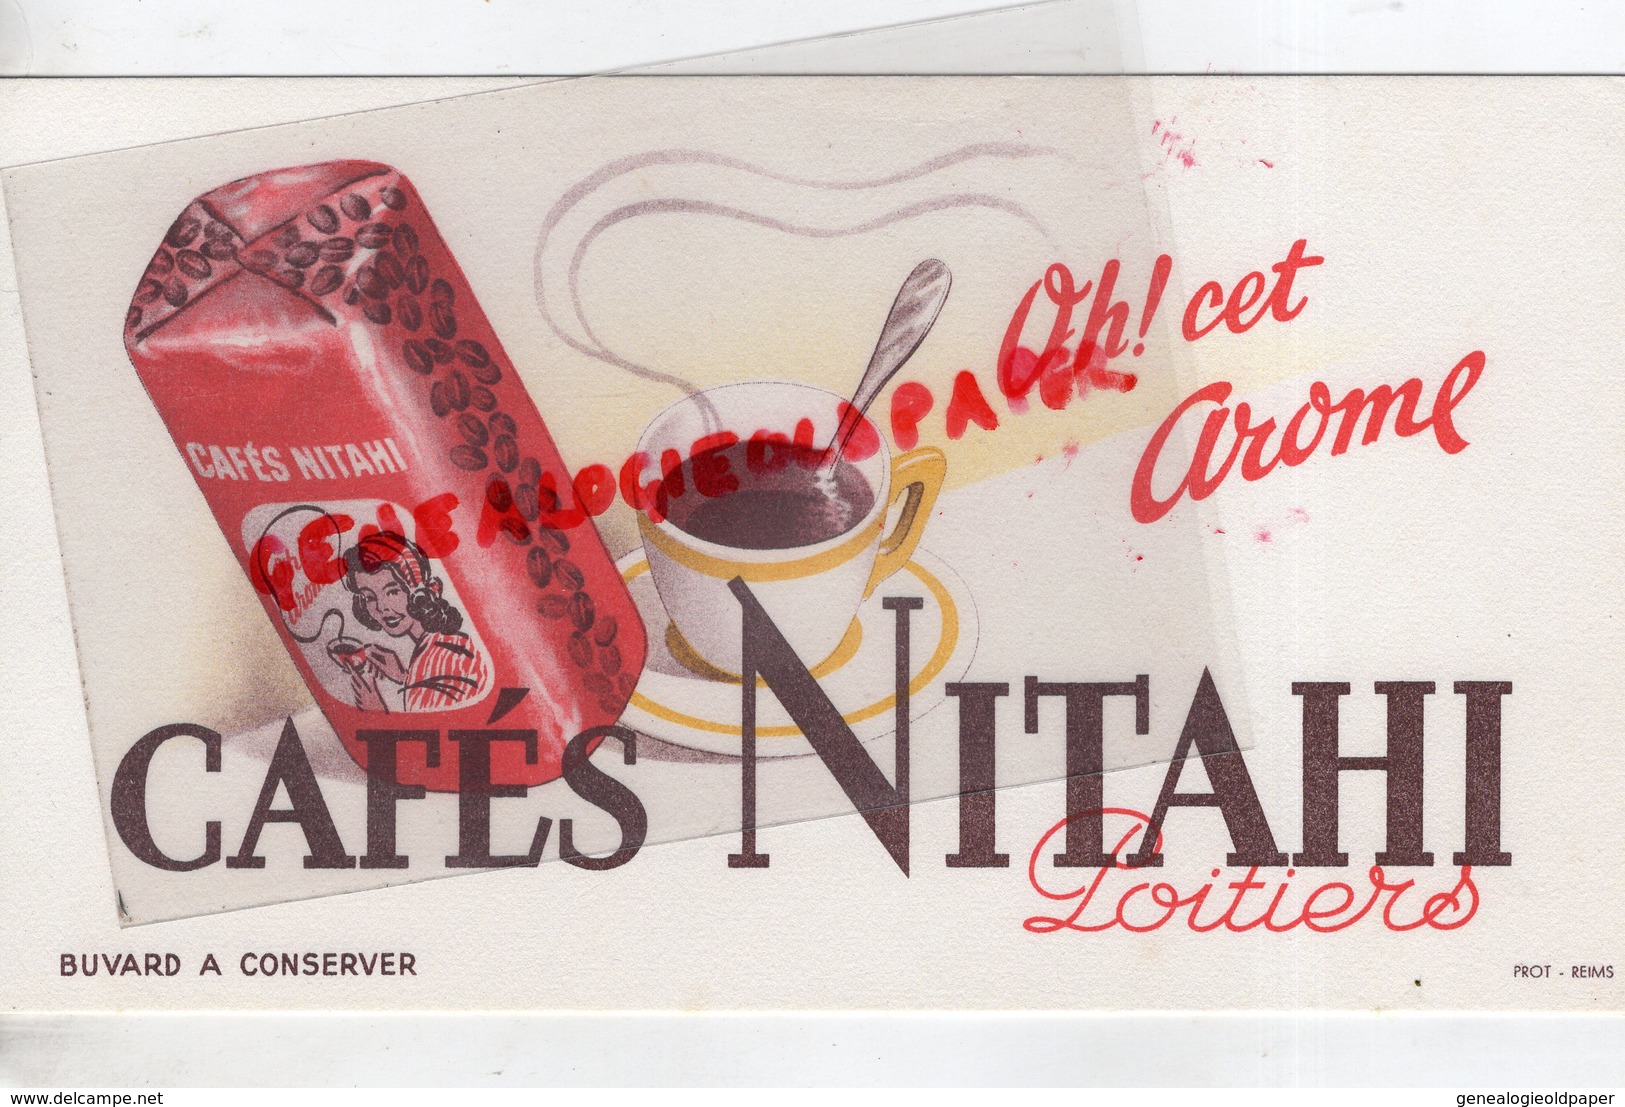 86- POITIERS- BUVARD CAFES CAFE NITAHI - IMPRIMERIE PROT REIMS - Coffee & Tea